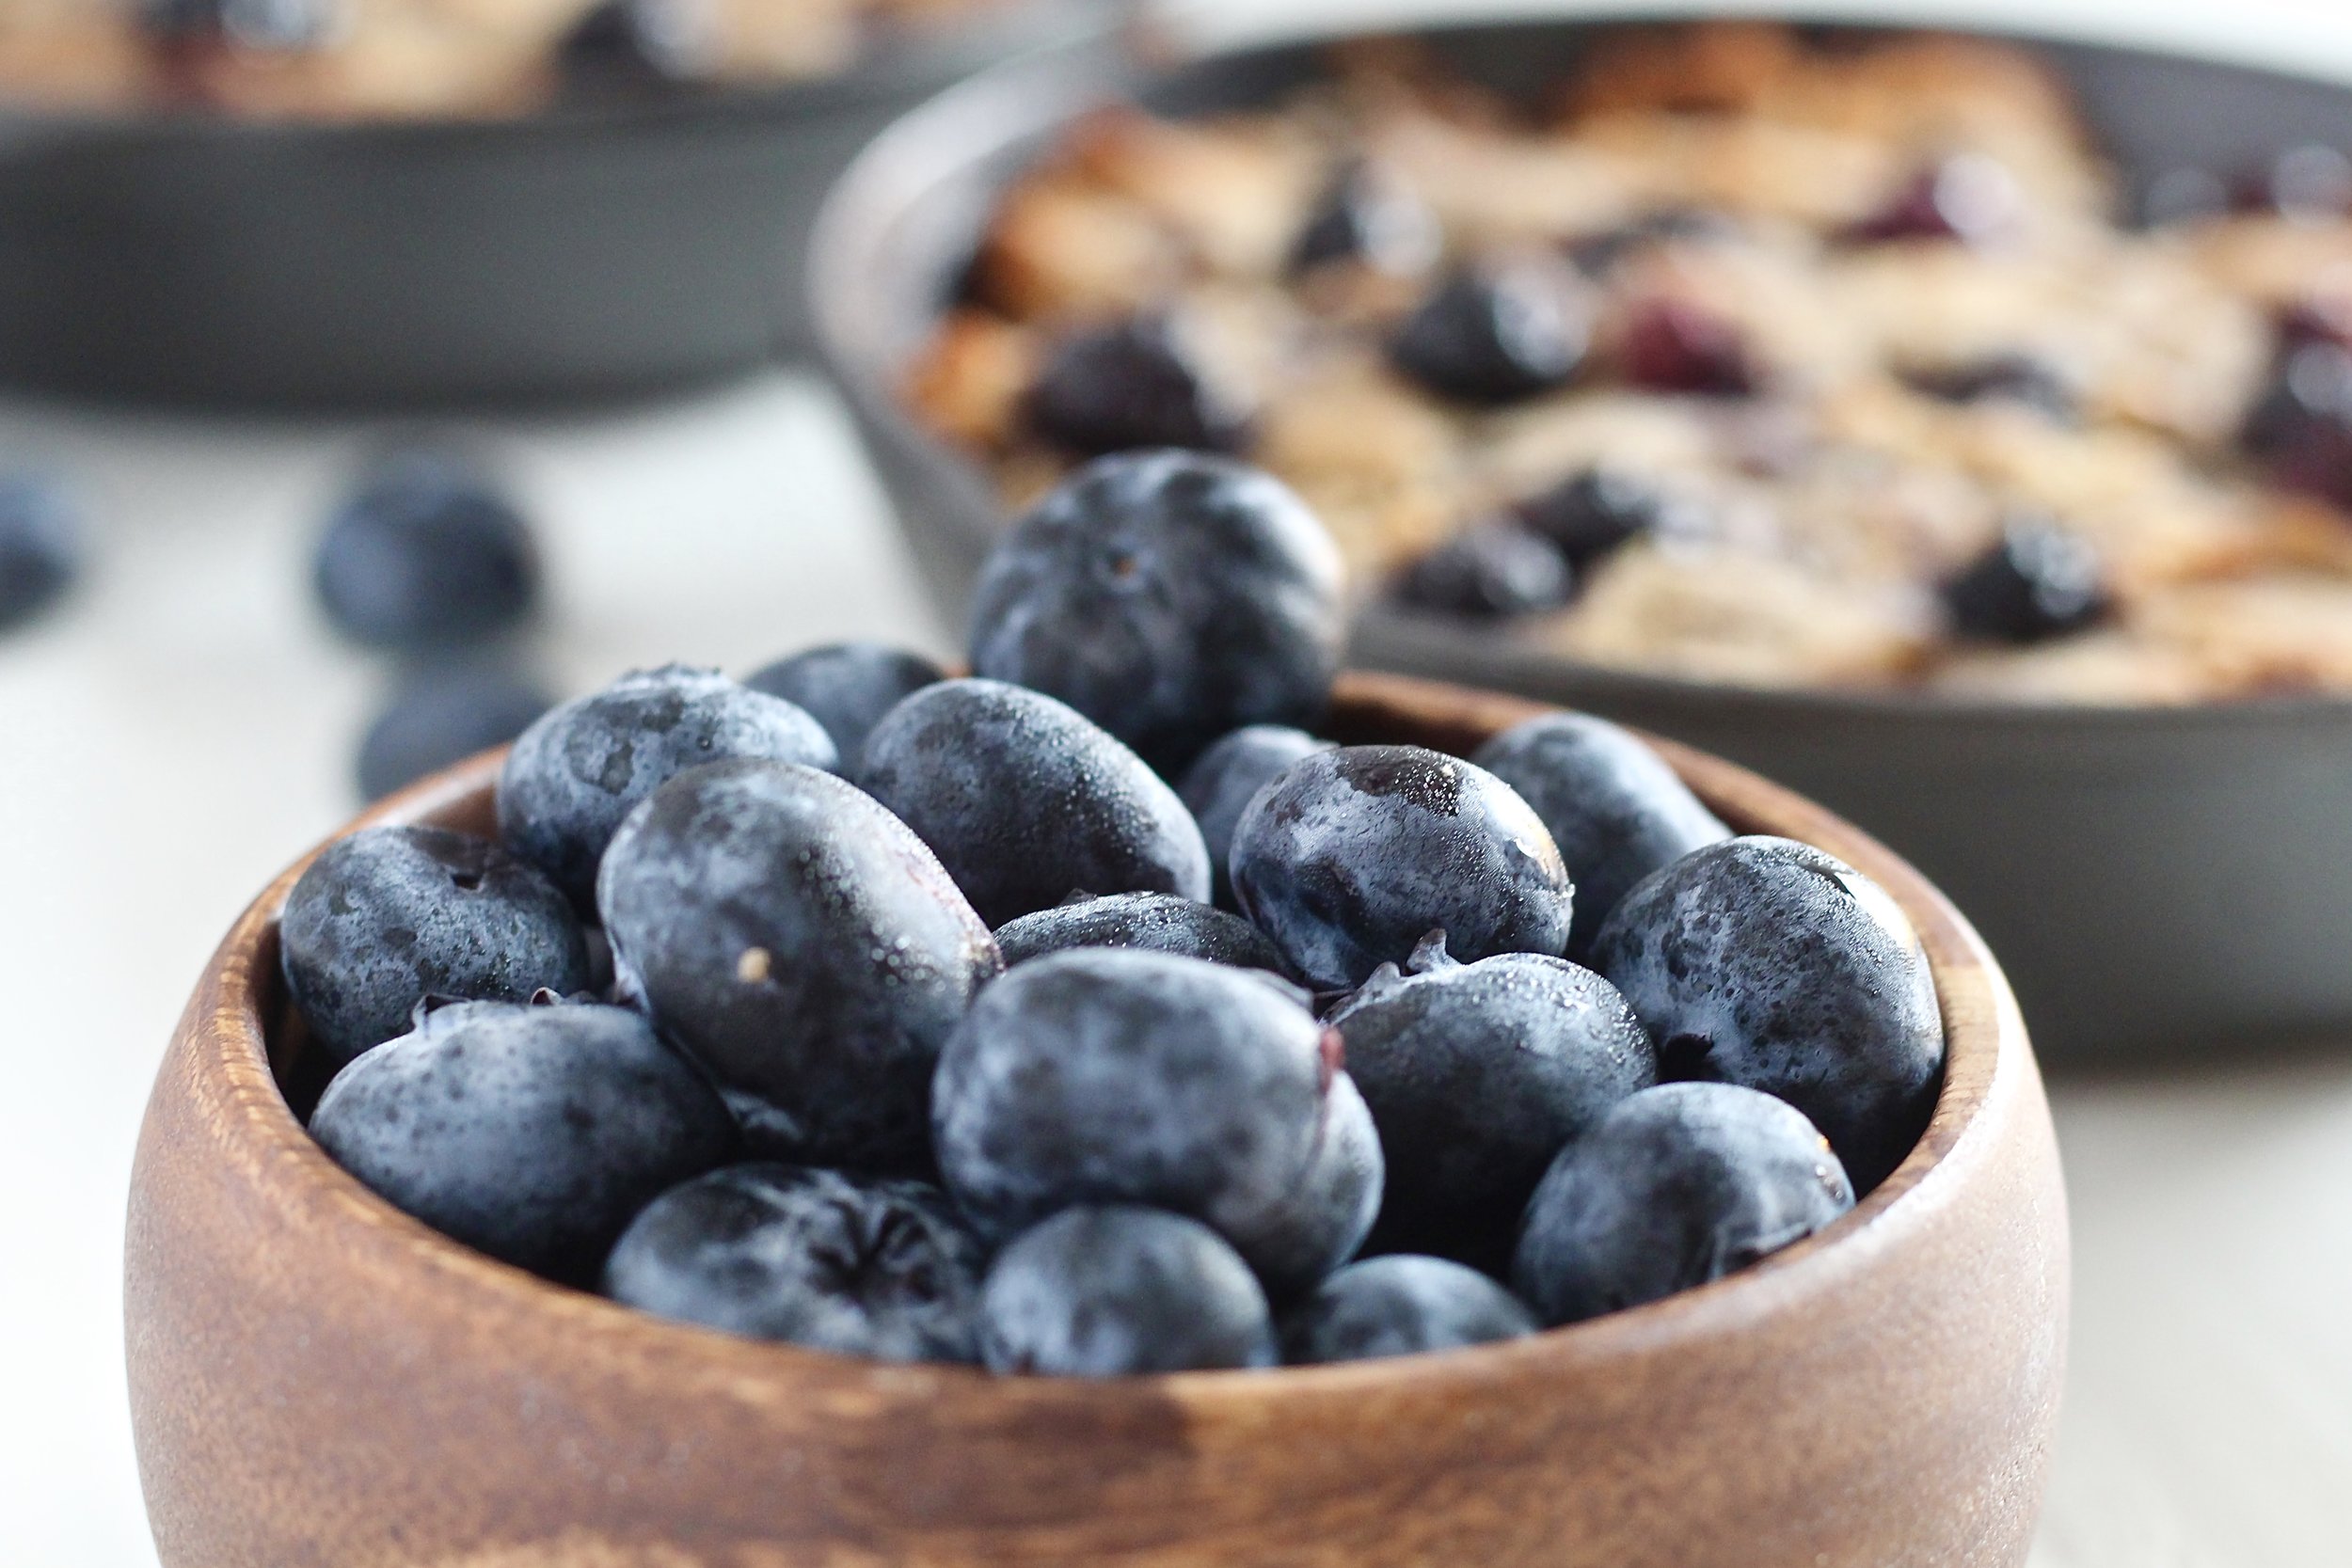 Grain Free Blueberry Lemon Breakfast Cookie Skillet with bowl of blueberries